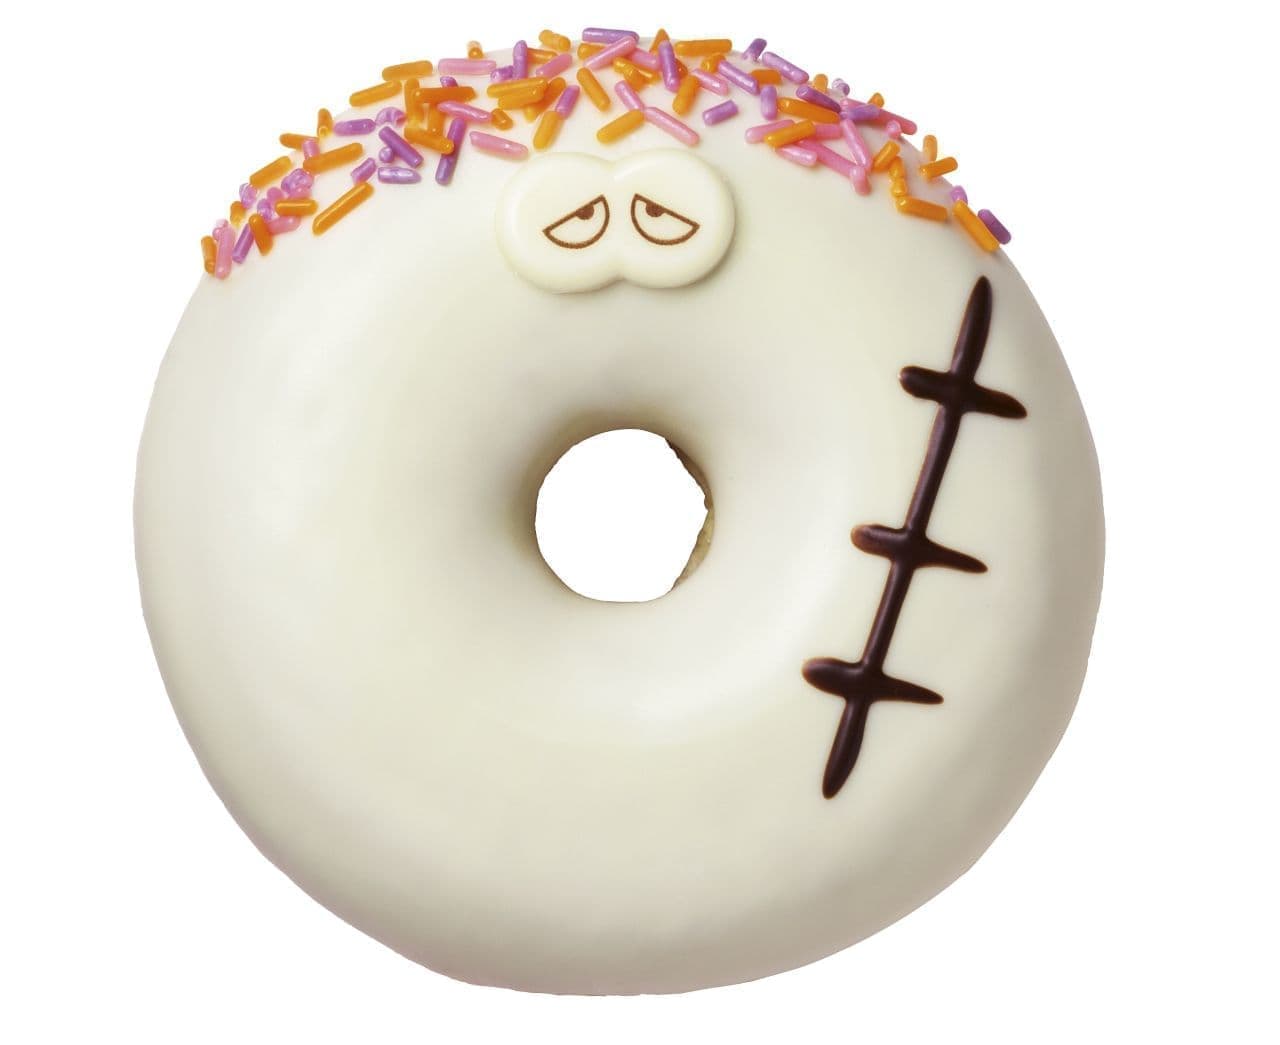 Mr. Donut "Mashiro Franken